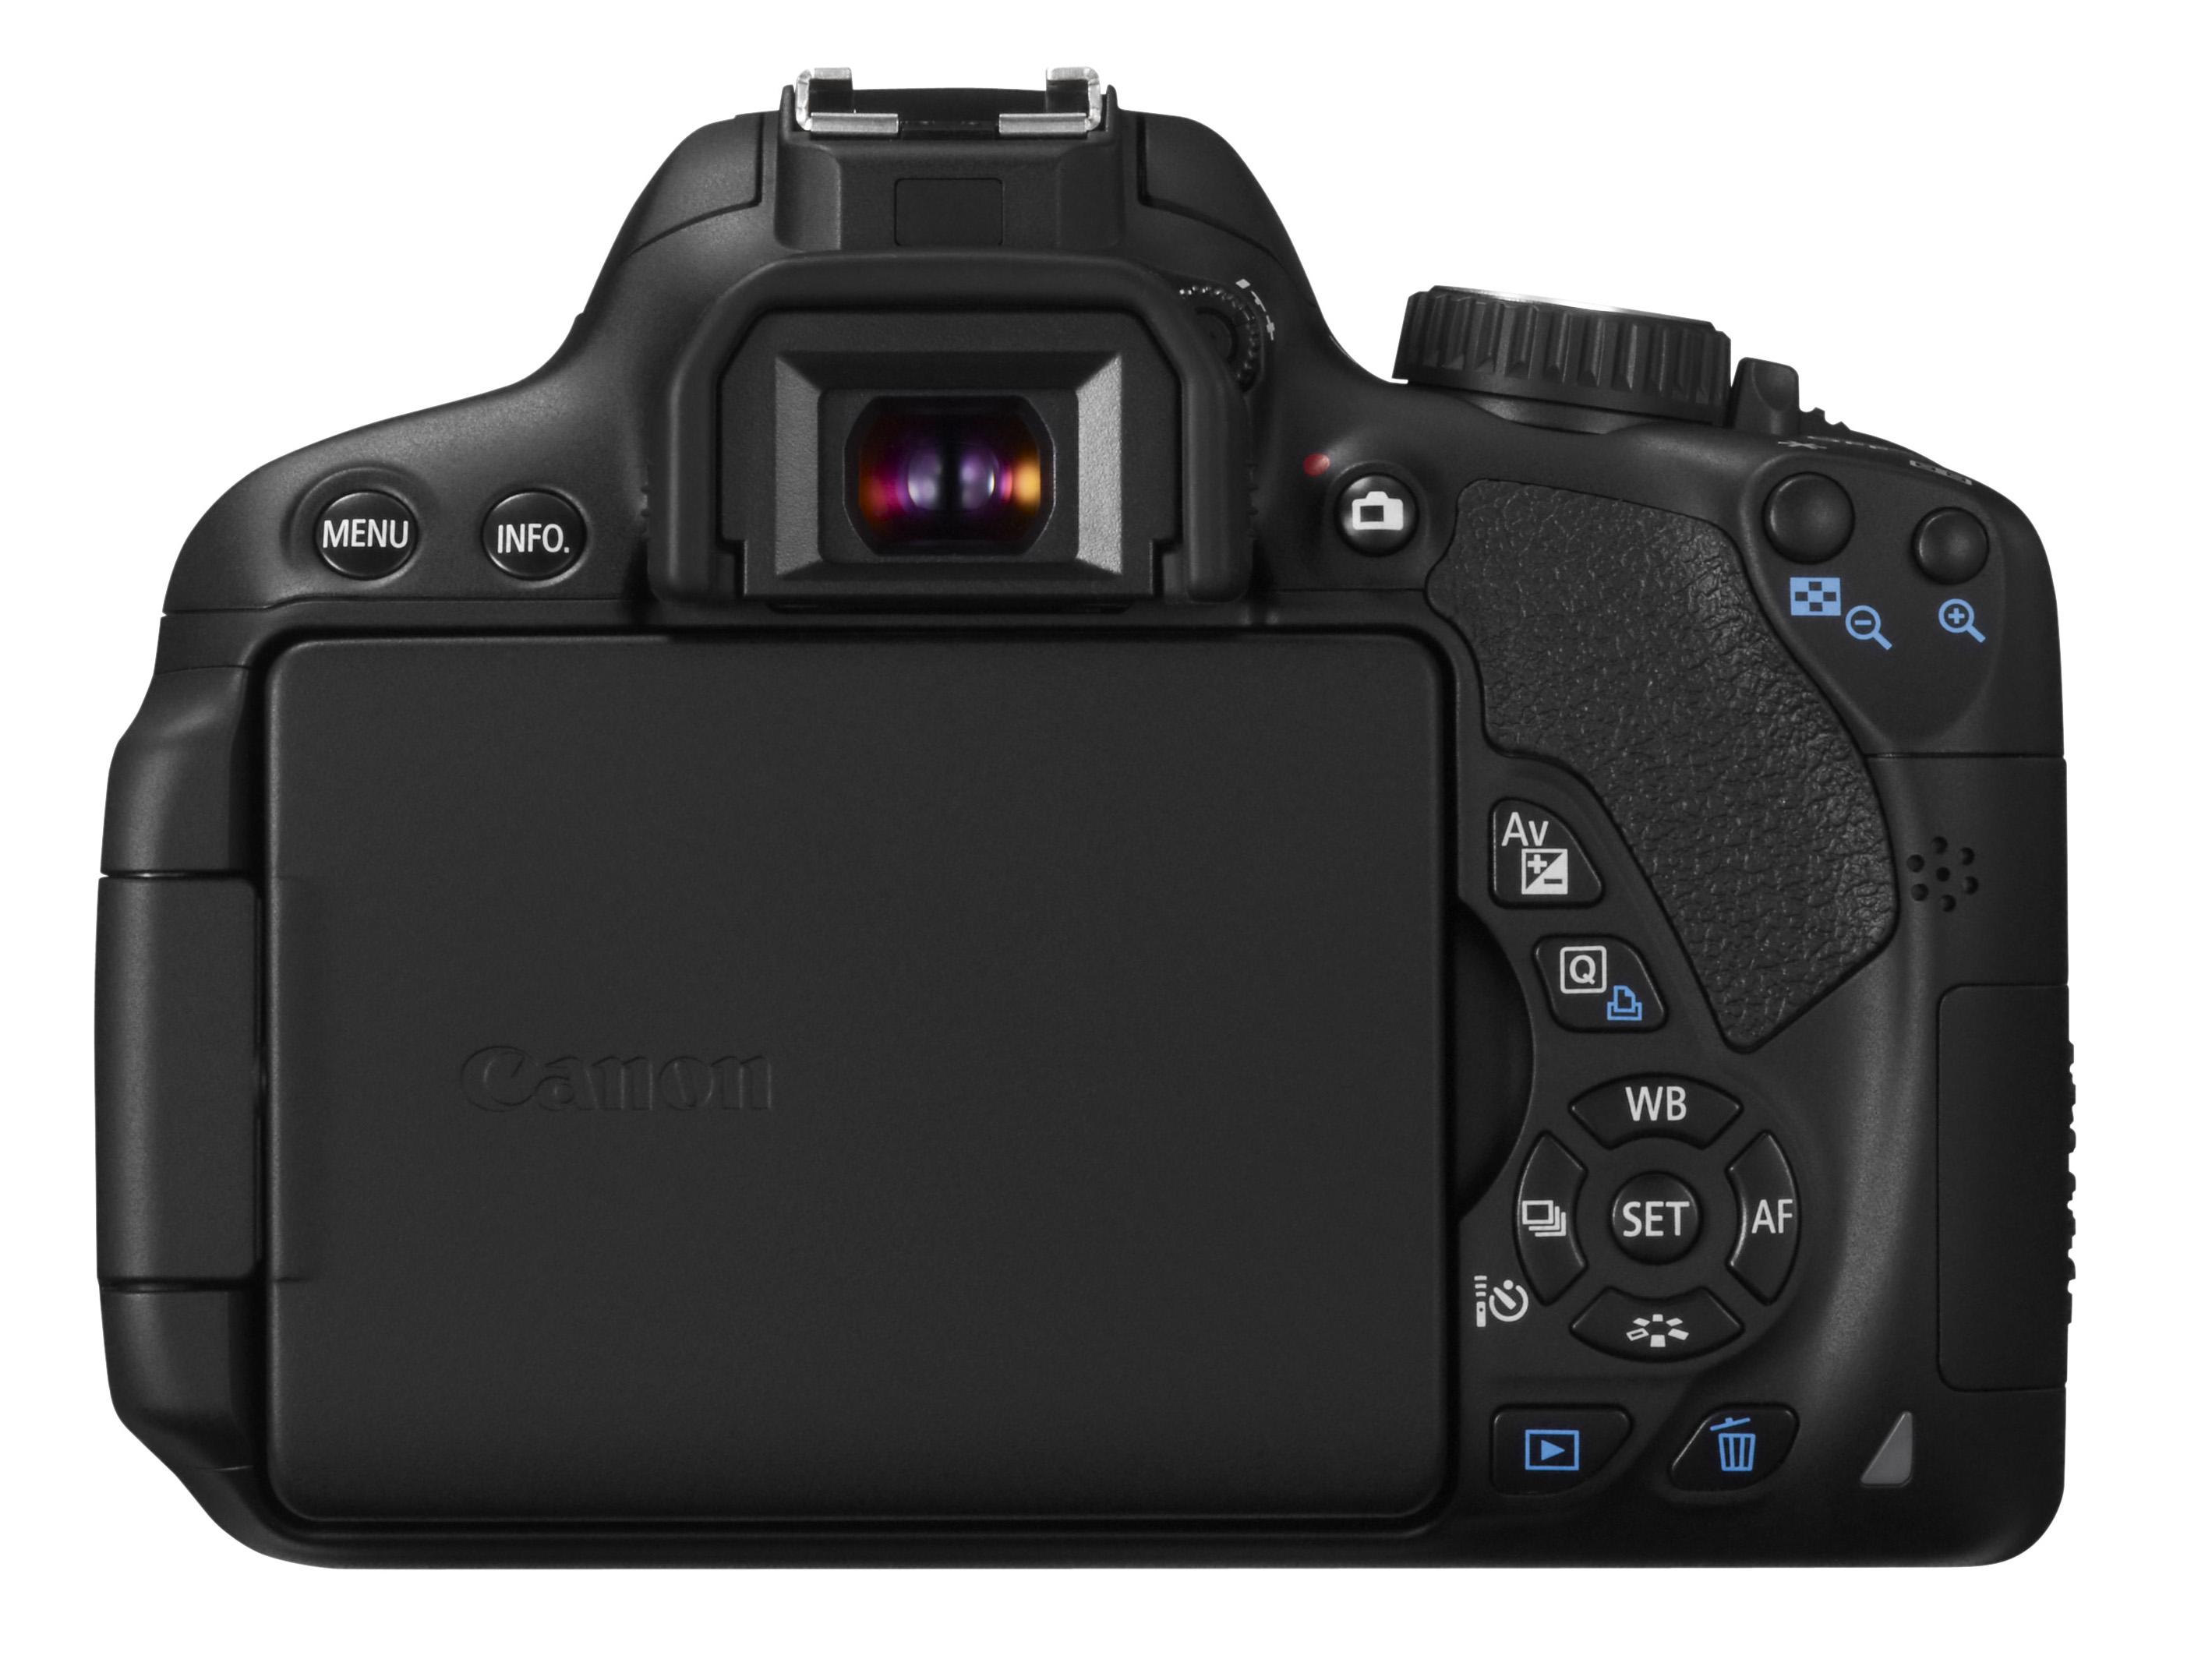 Canon EOS 650D / Rebel T4i / Kiss X6i | Digital Photography Live